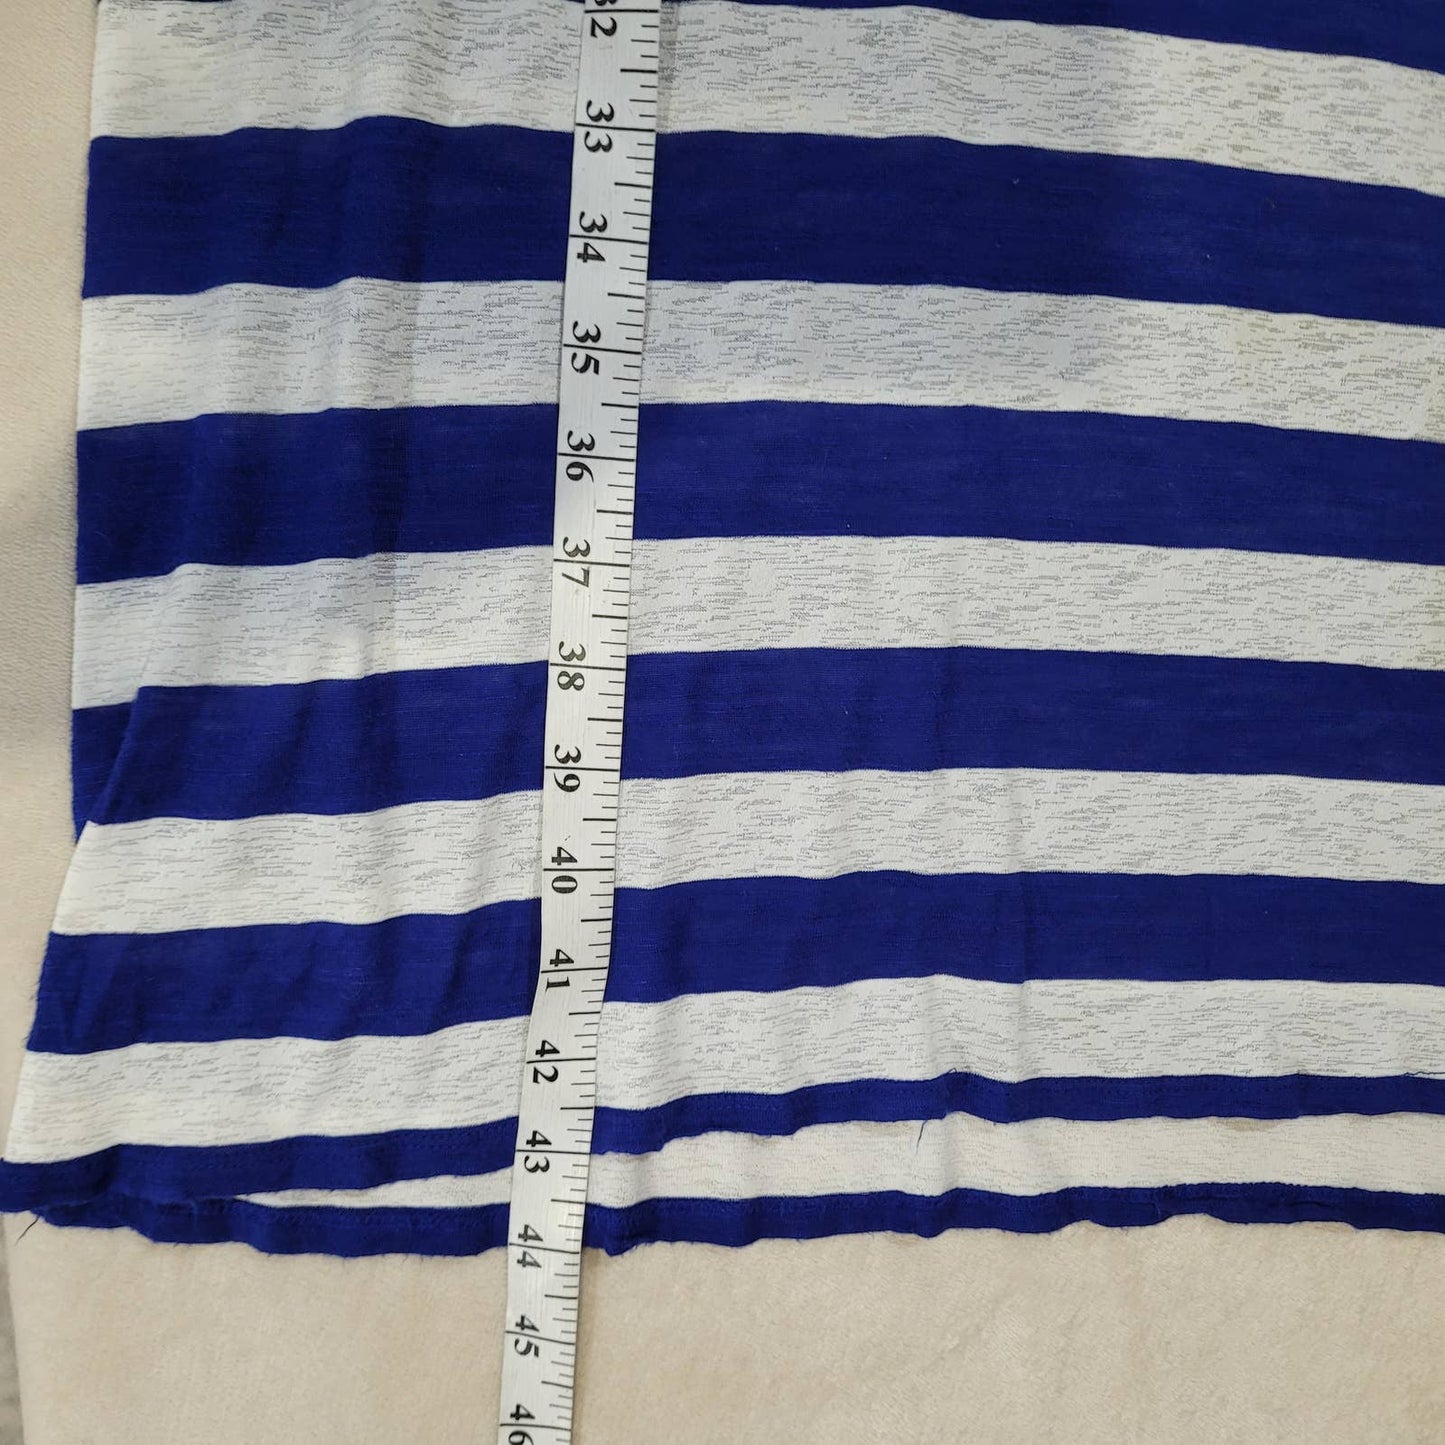 Sea Swimwear Blue Striped Coverup Tank Dress - Size 2X